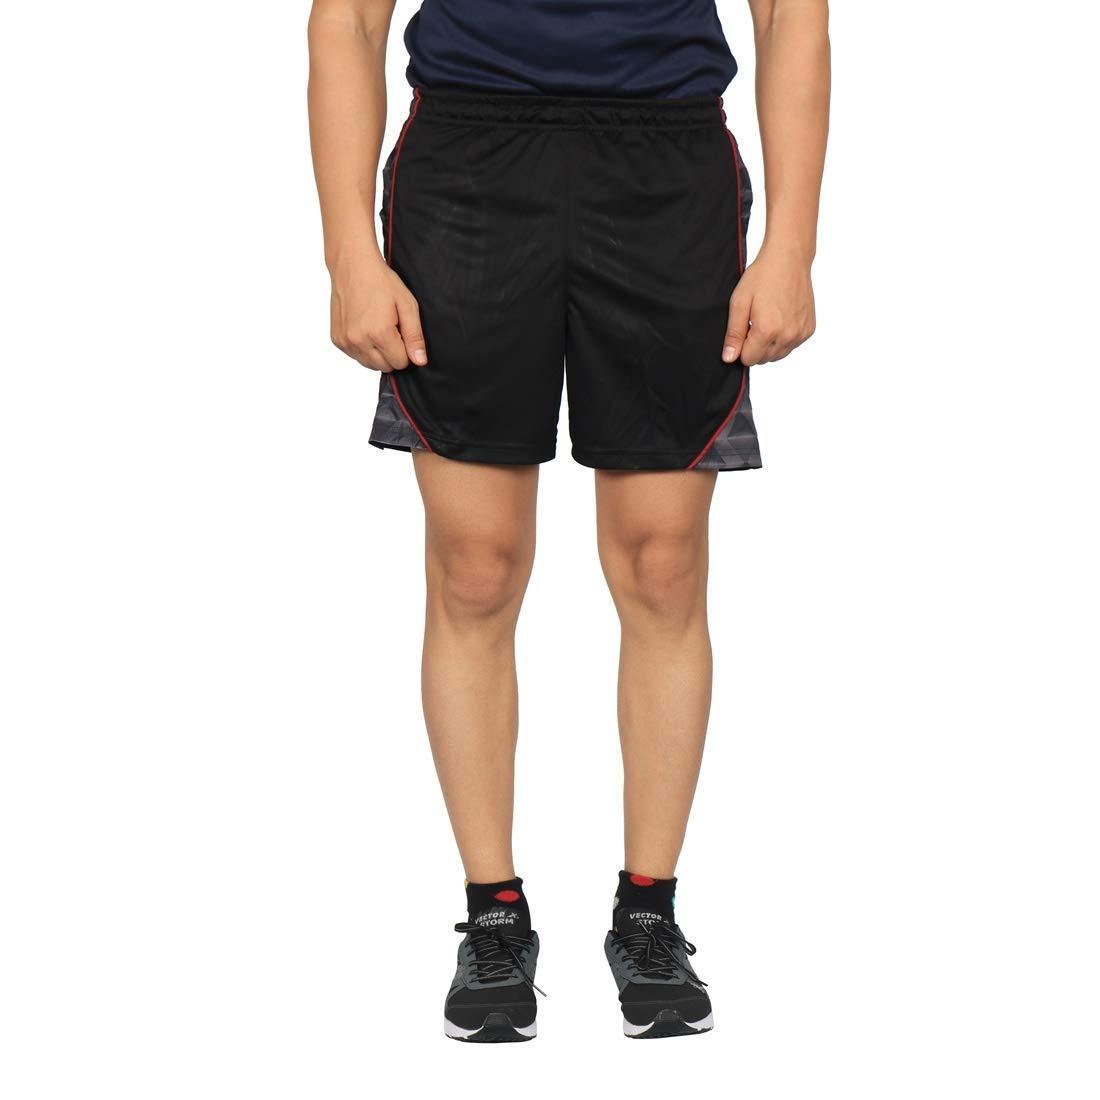 Vector X VS-2900 Polyester Material Shorts for Men, Black - Best Price online Prokicksports.com